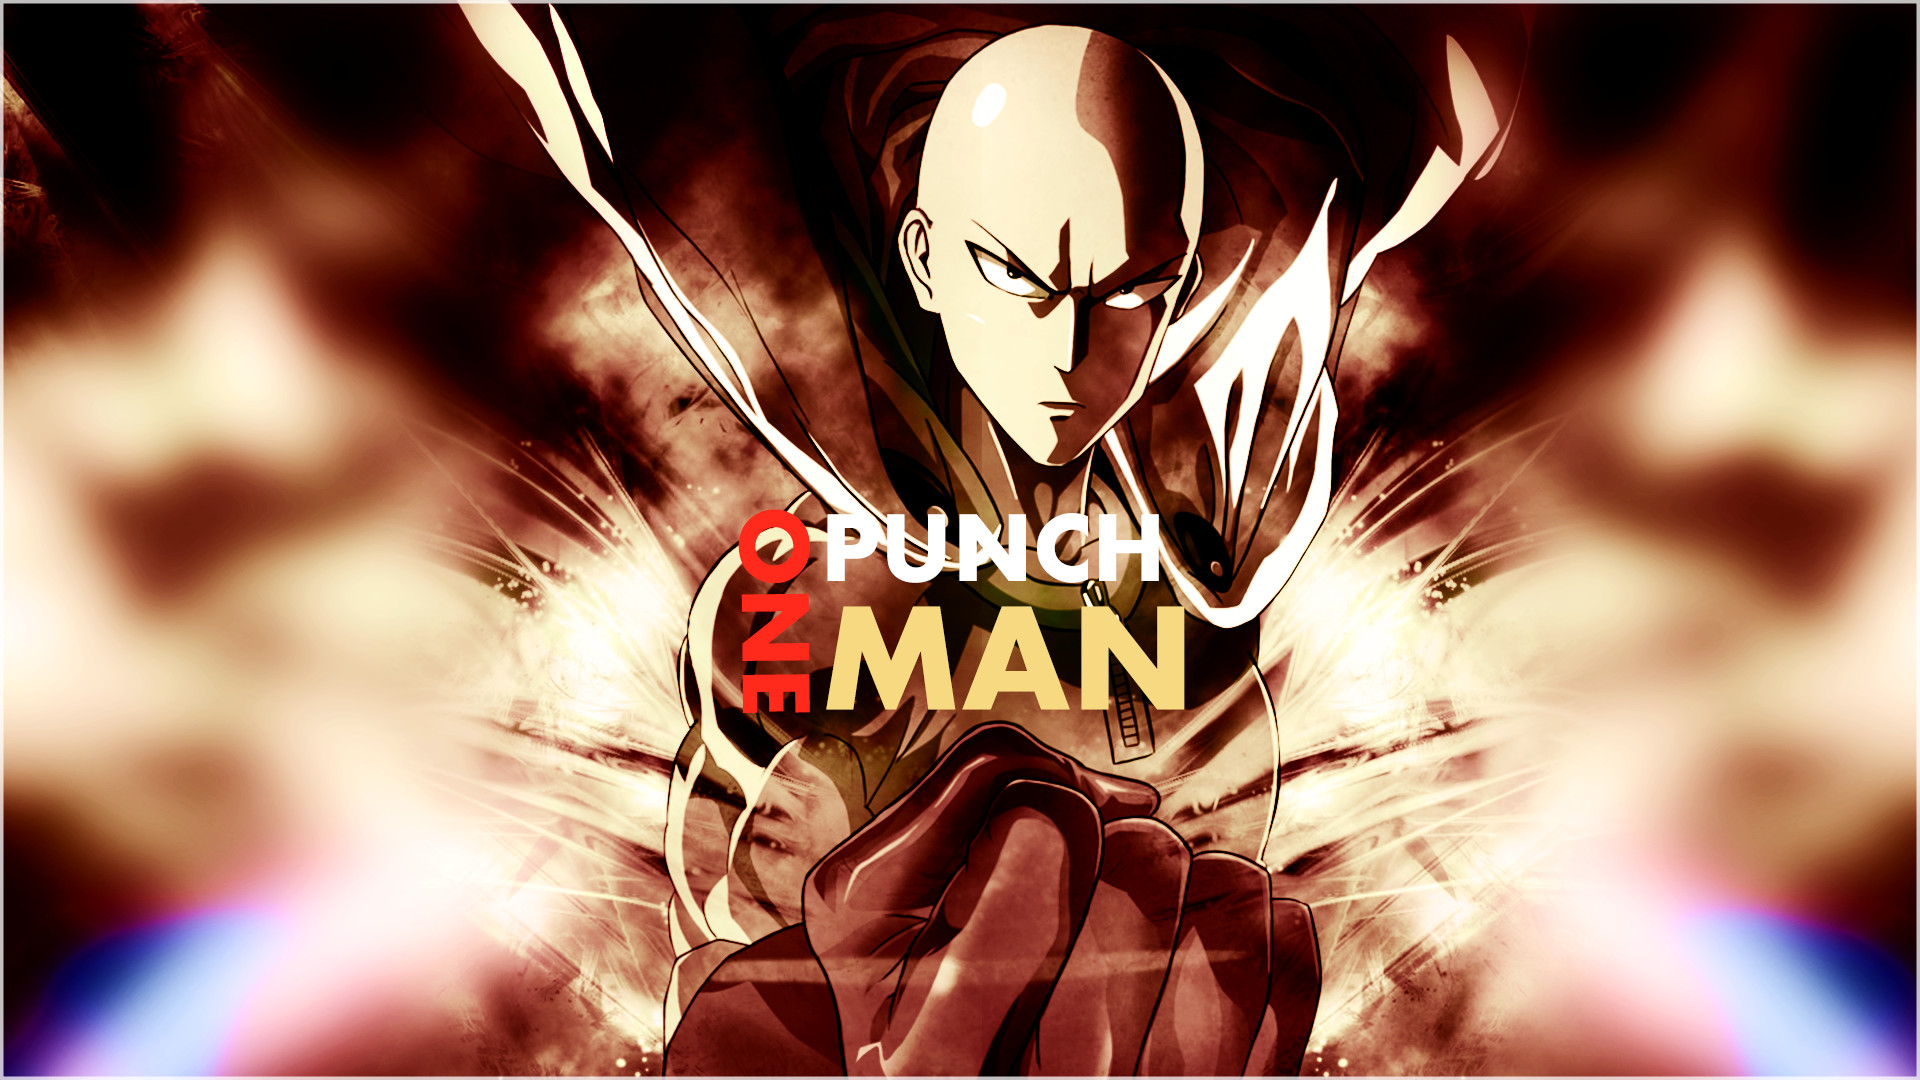 Saitama One Punch Man Anime Wallpaper ID:3216